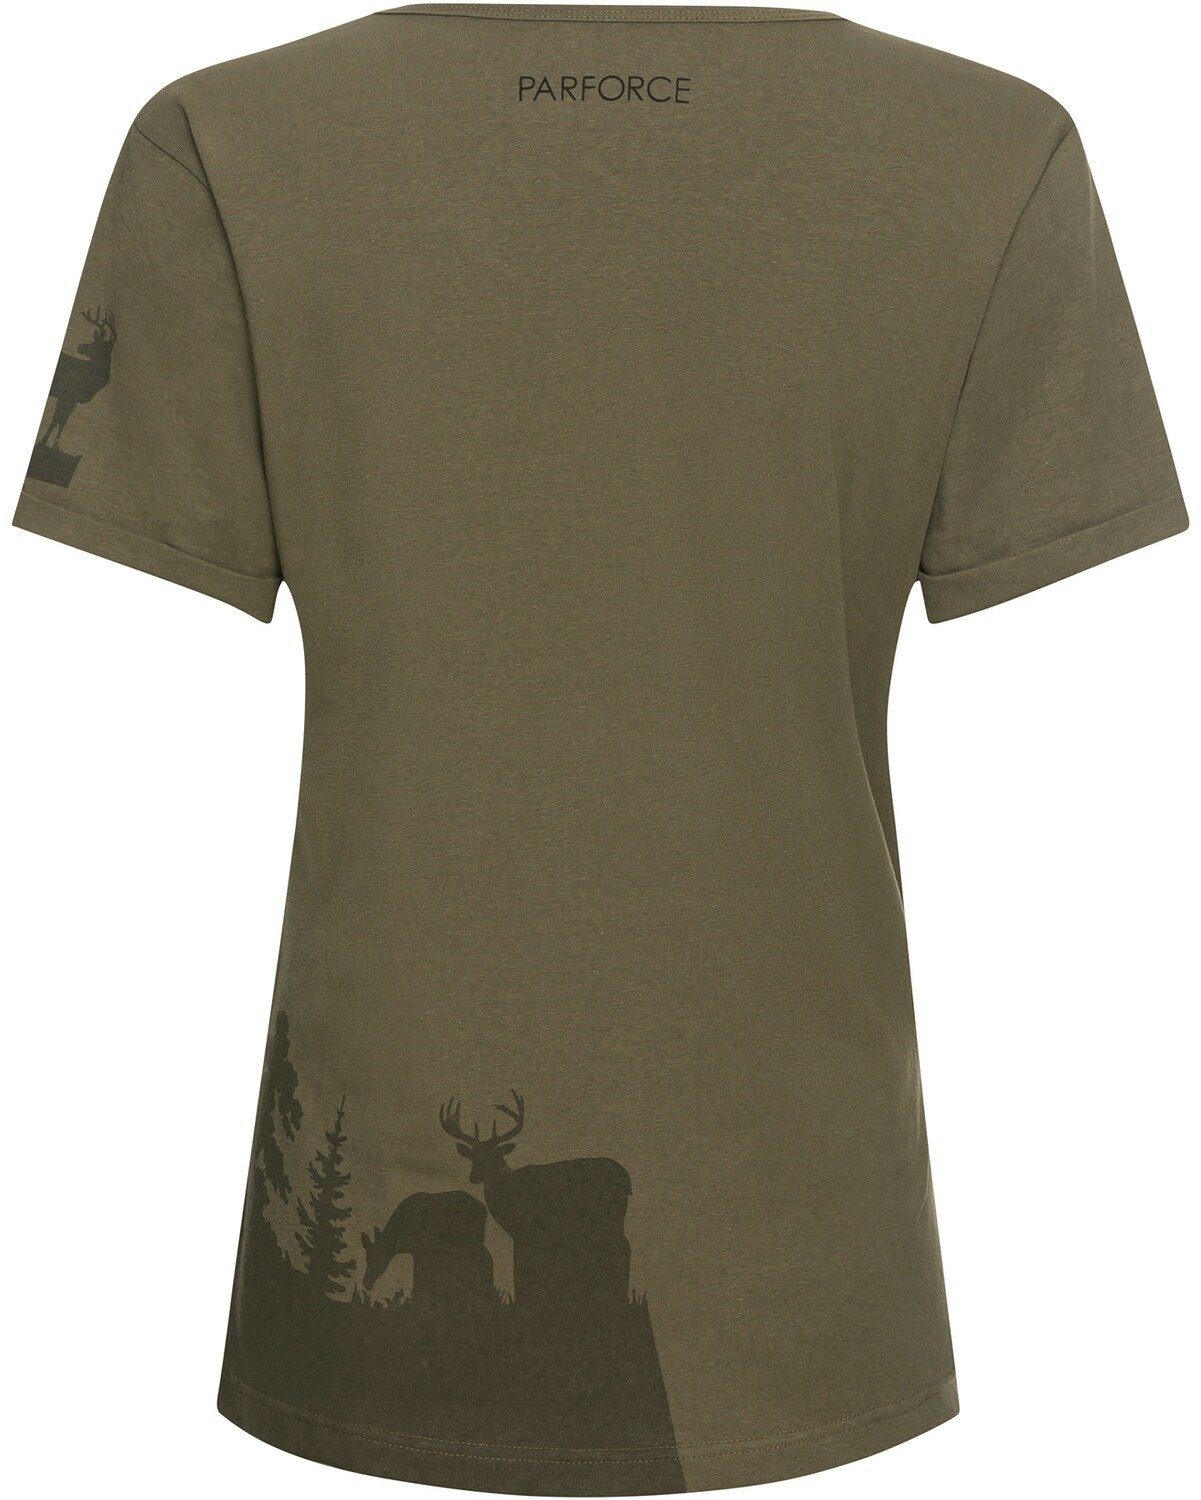 Rotwild T-Shirt Damen Parforce T-Shirt Silhouette